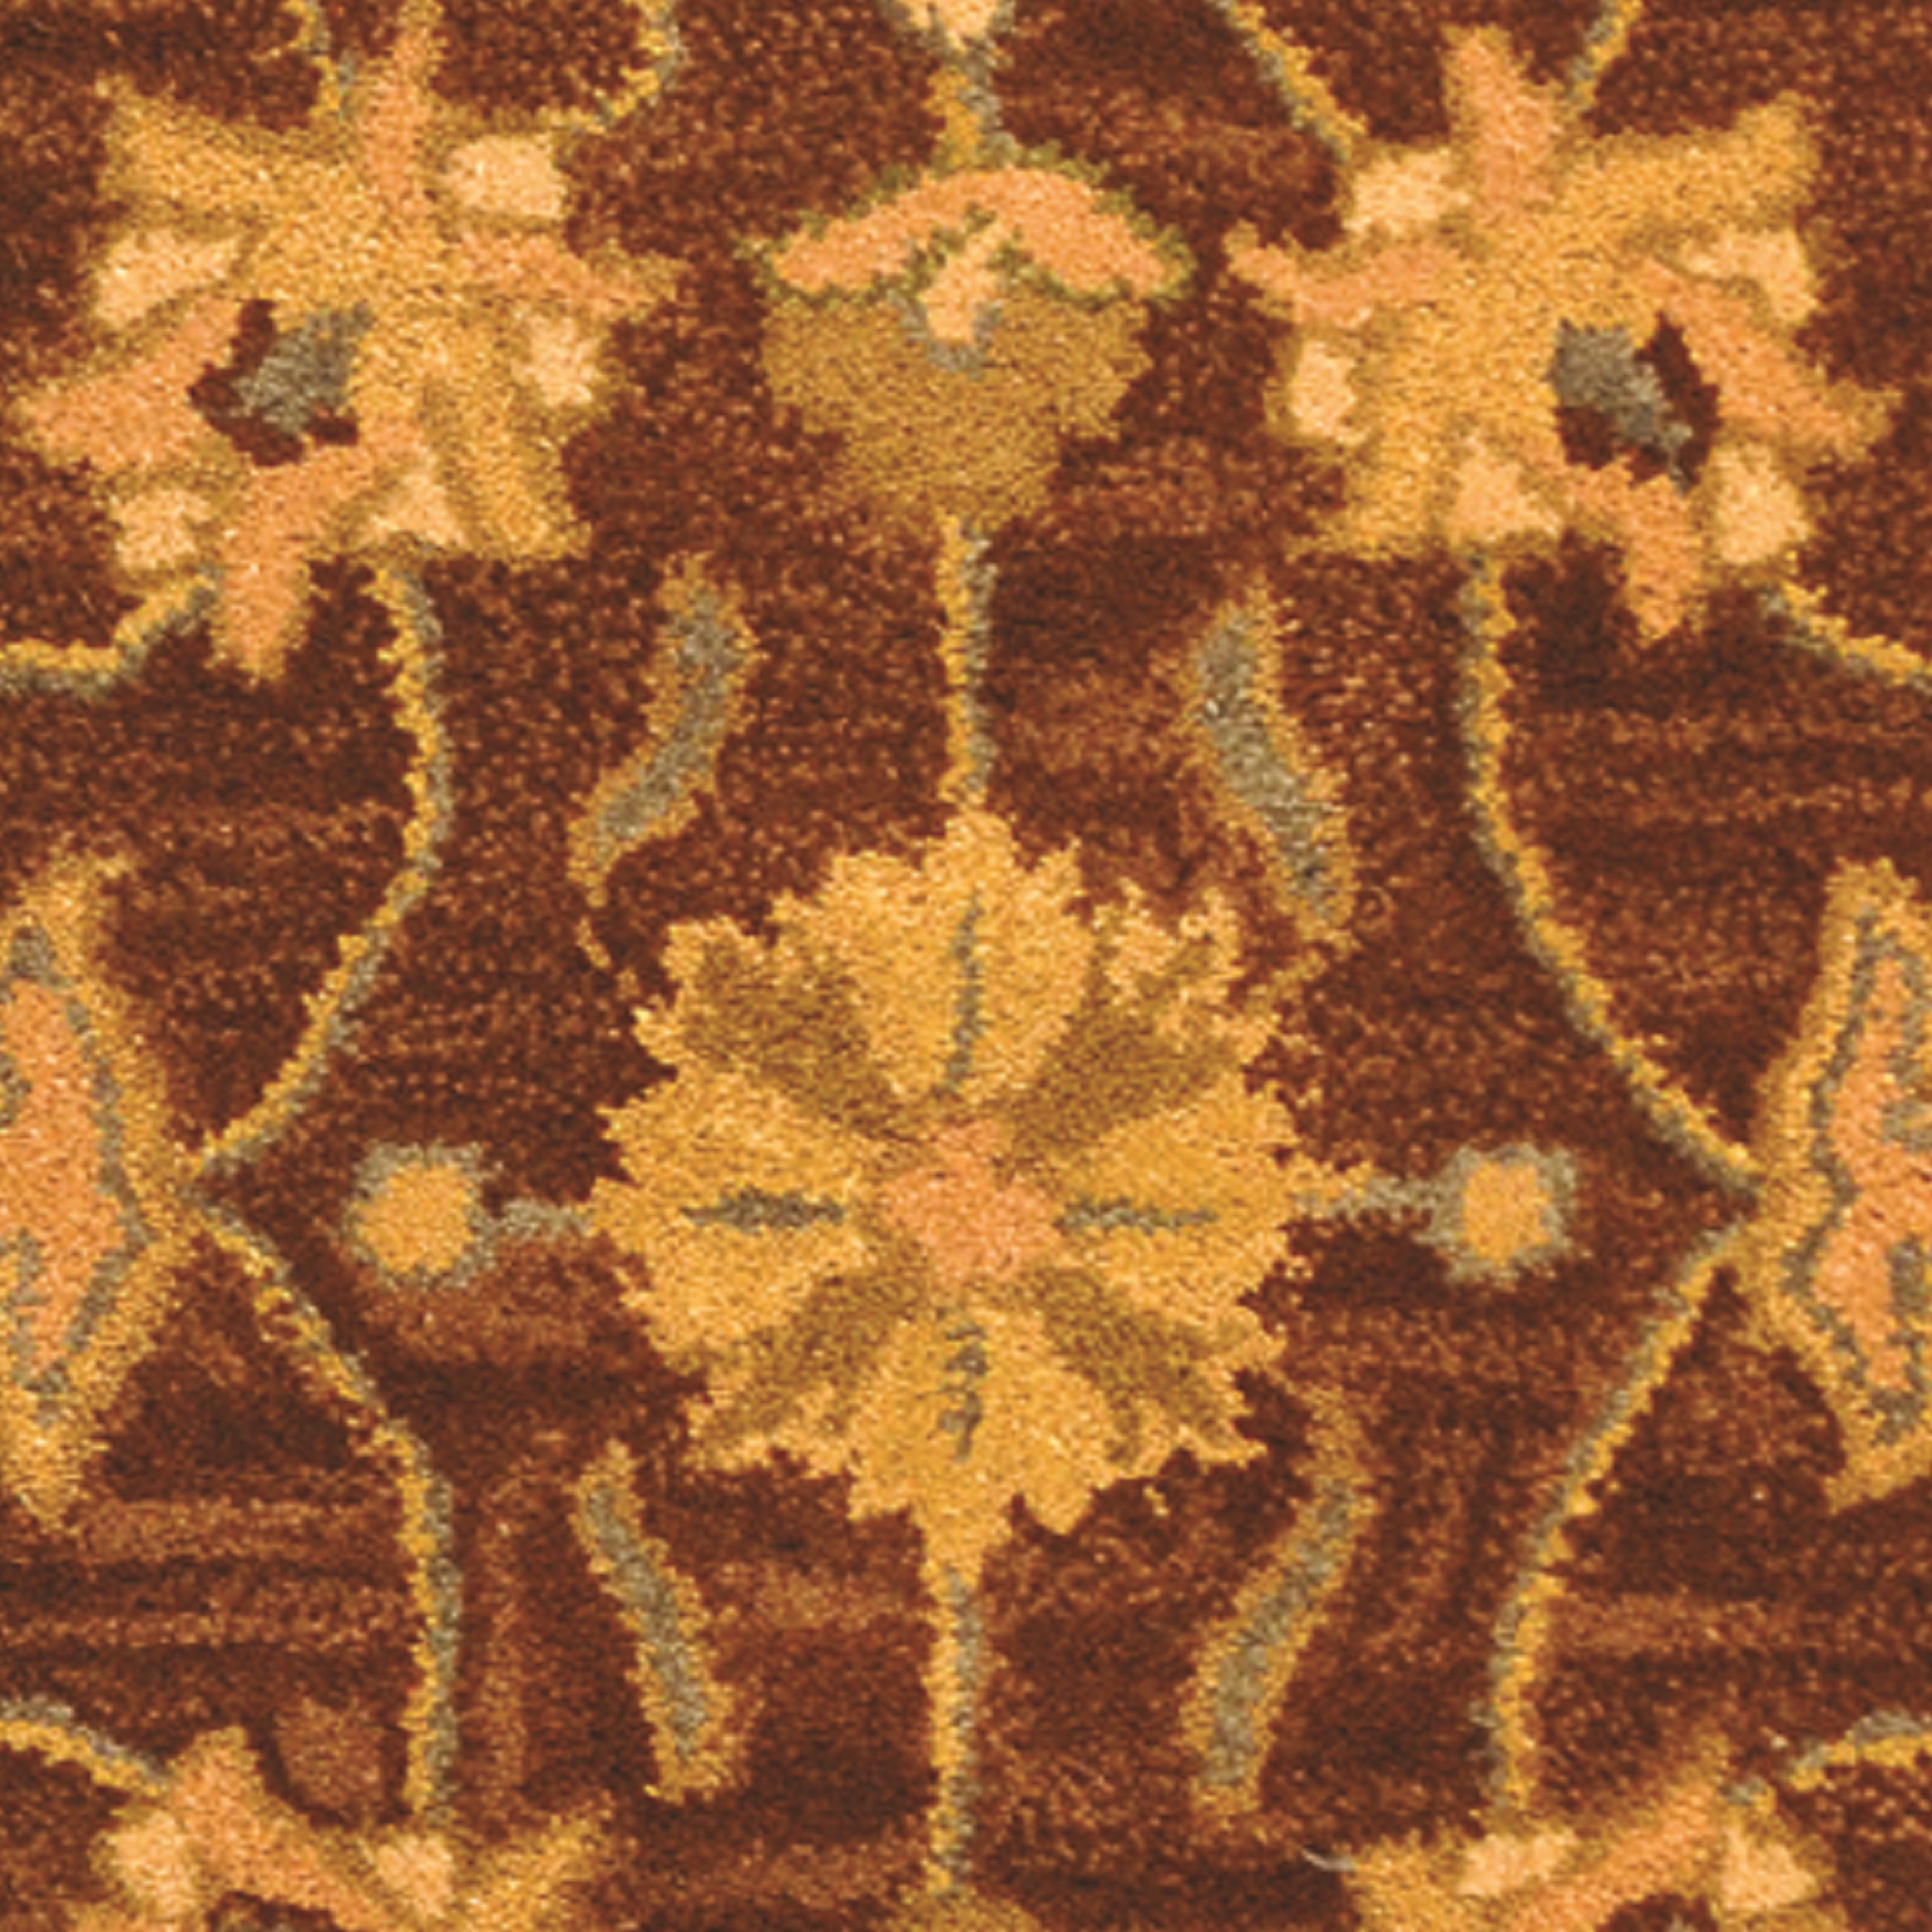 SAFAVIEH Heritage Regis Traditional Wool Area Rug, Brown/Blue, 6' x 6' Round - image 3 of 4